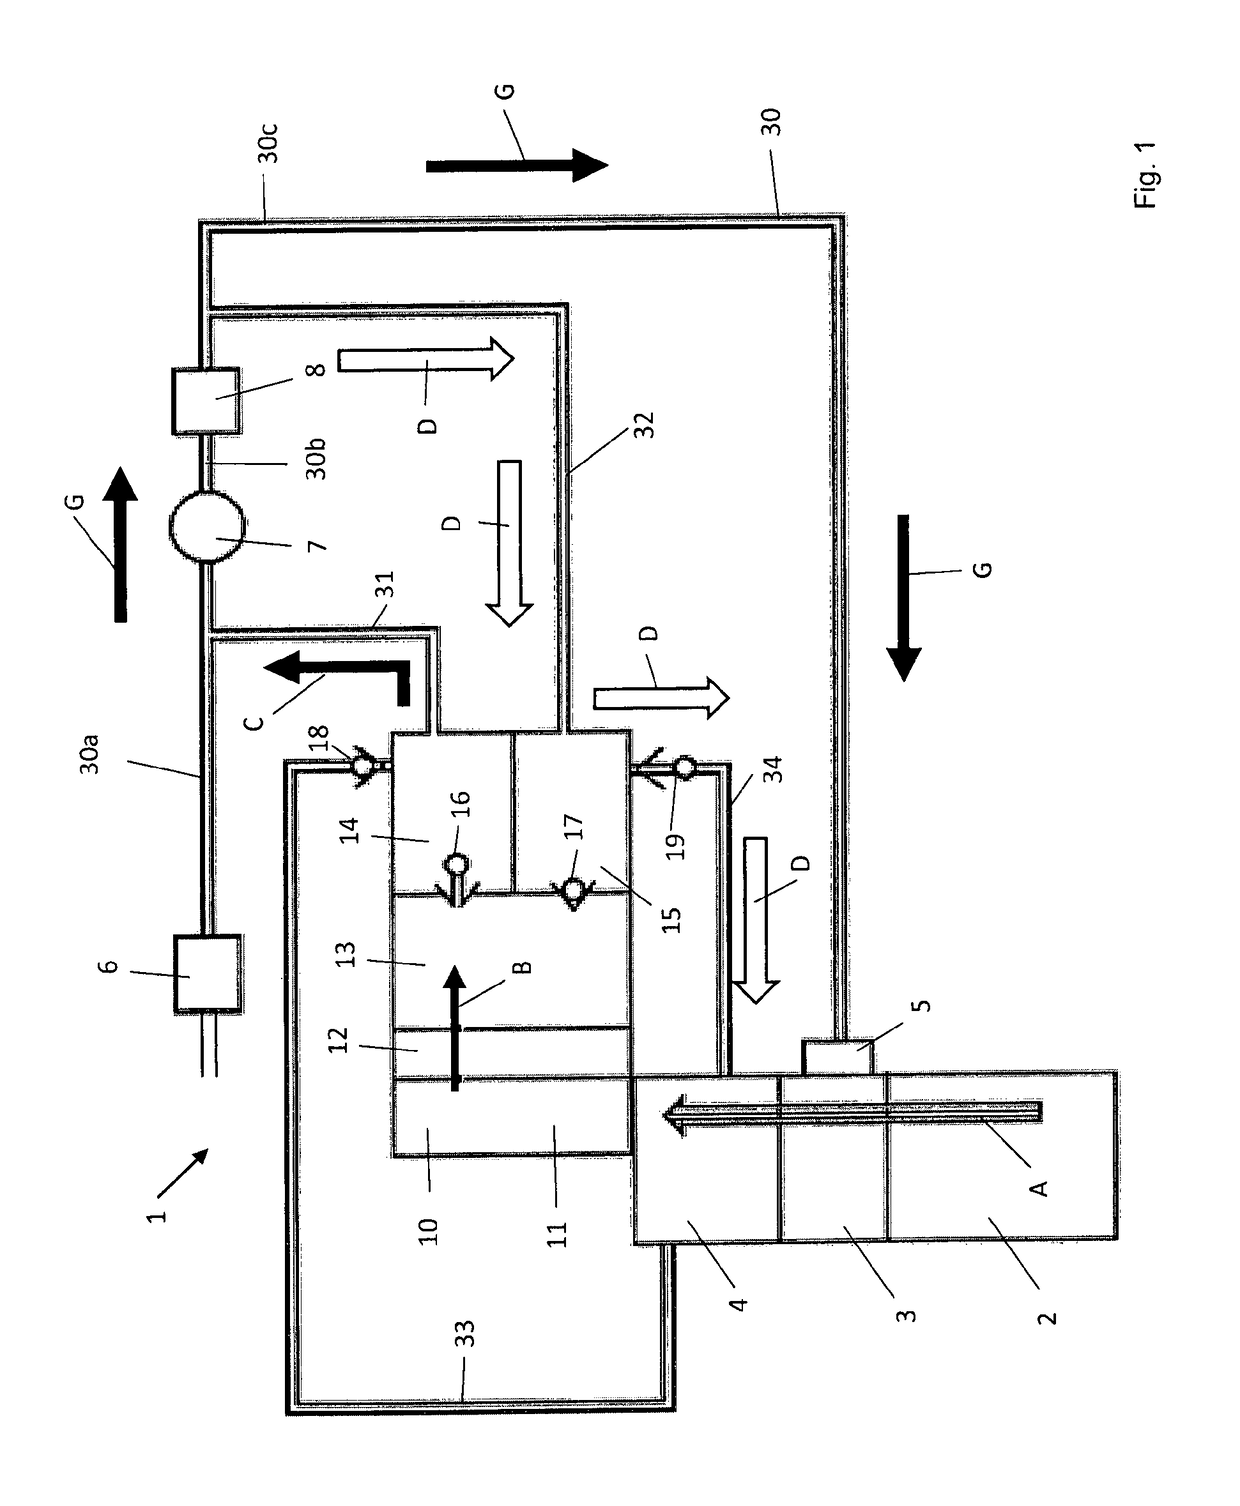 Ventilation system for an internal combustion engine